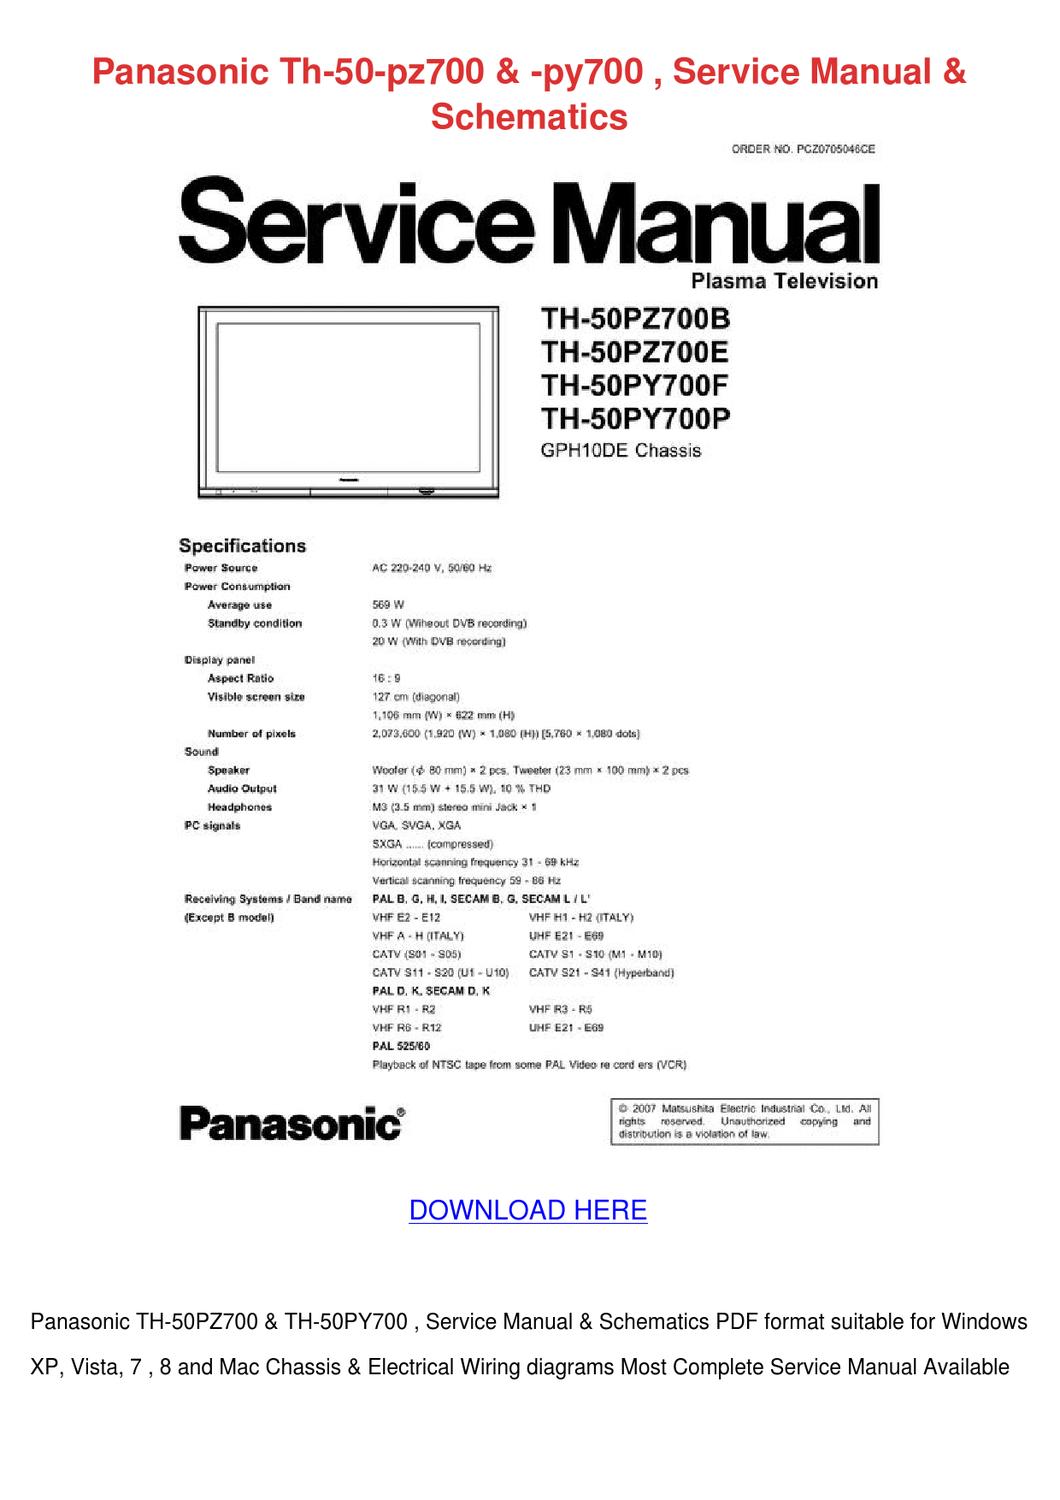 panasonic pt-lm1 service manual